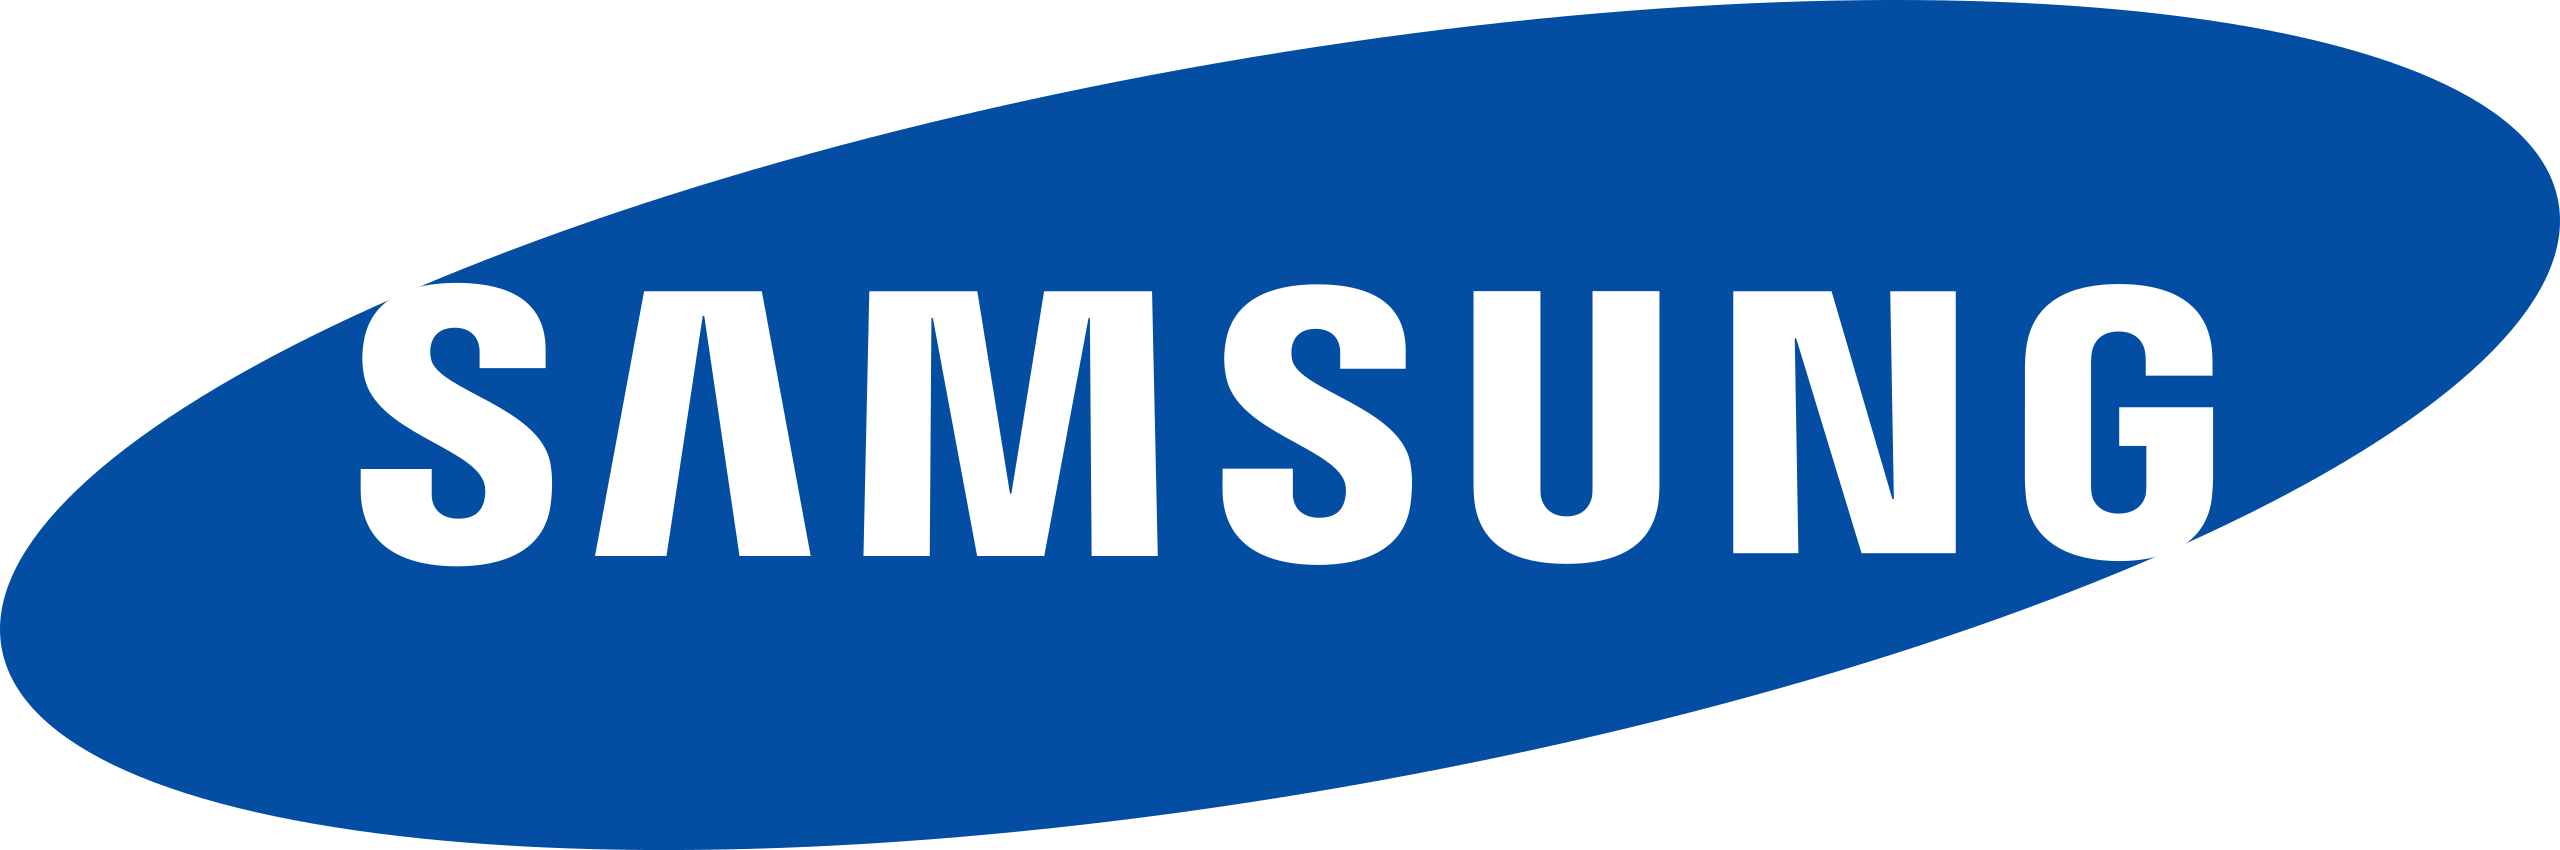 Samsung_Logo.svg_